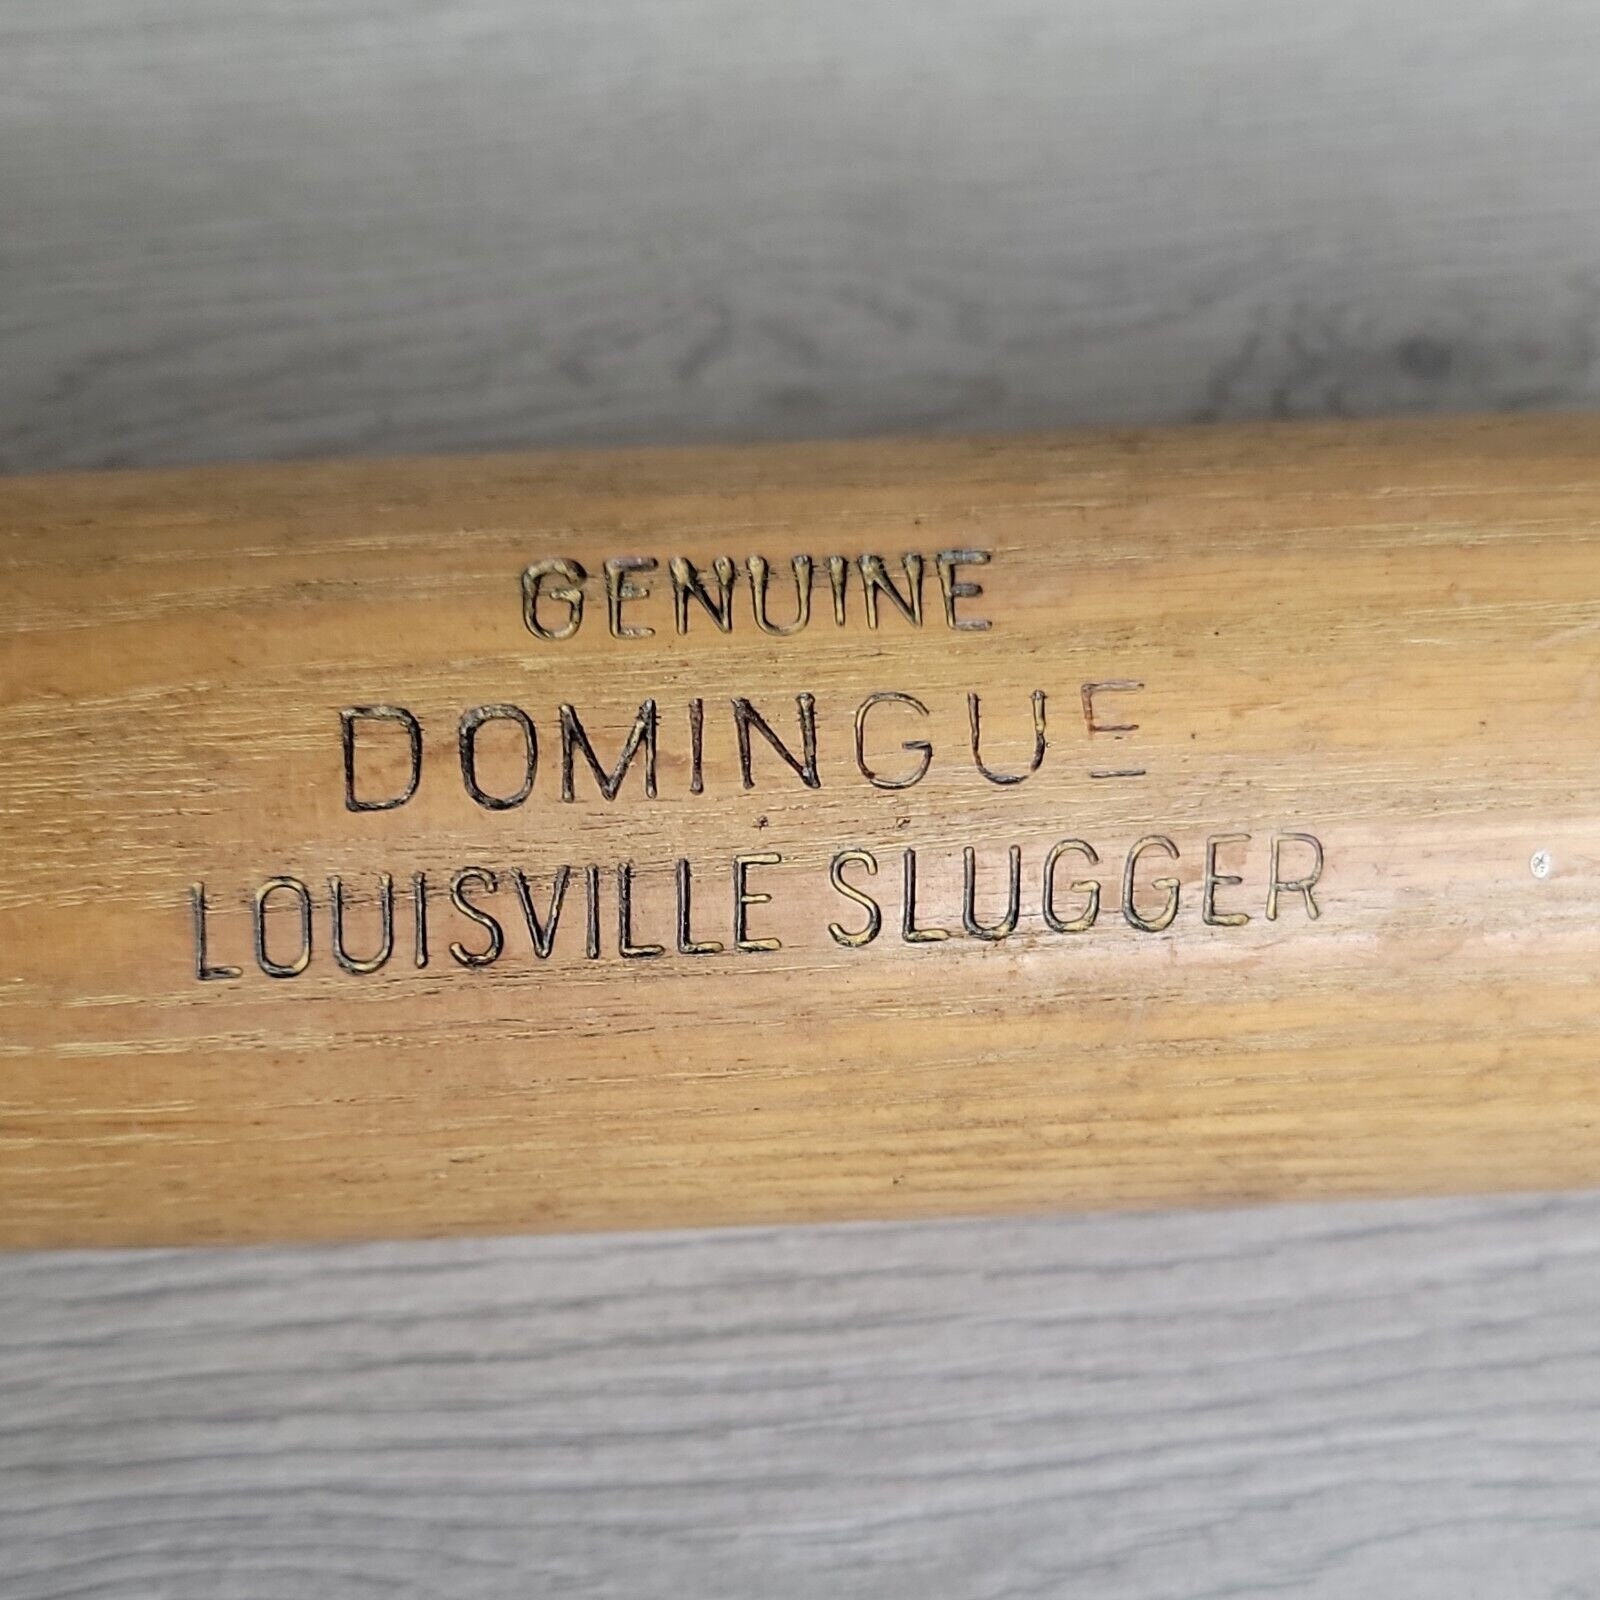 mini baseball bats lot Louisville Slugger 125 + Indians + * wood pen bat